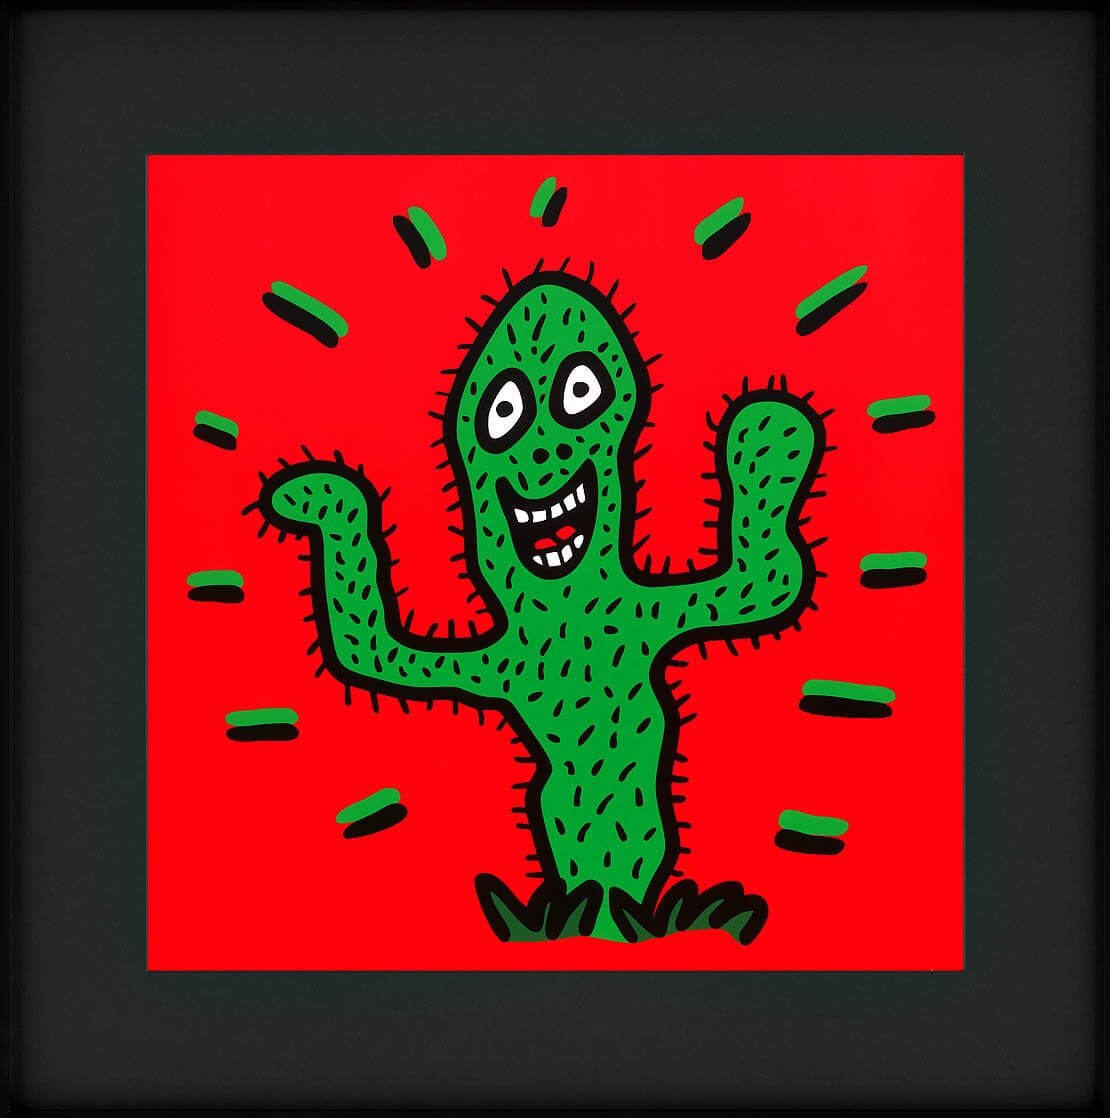 James Rizzi: Icon Cactus